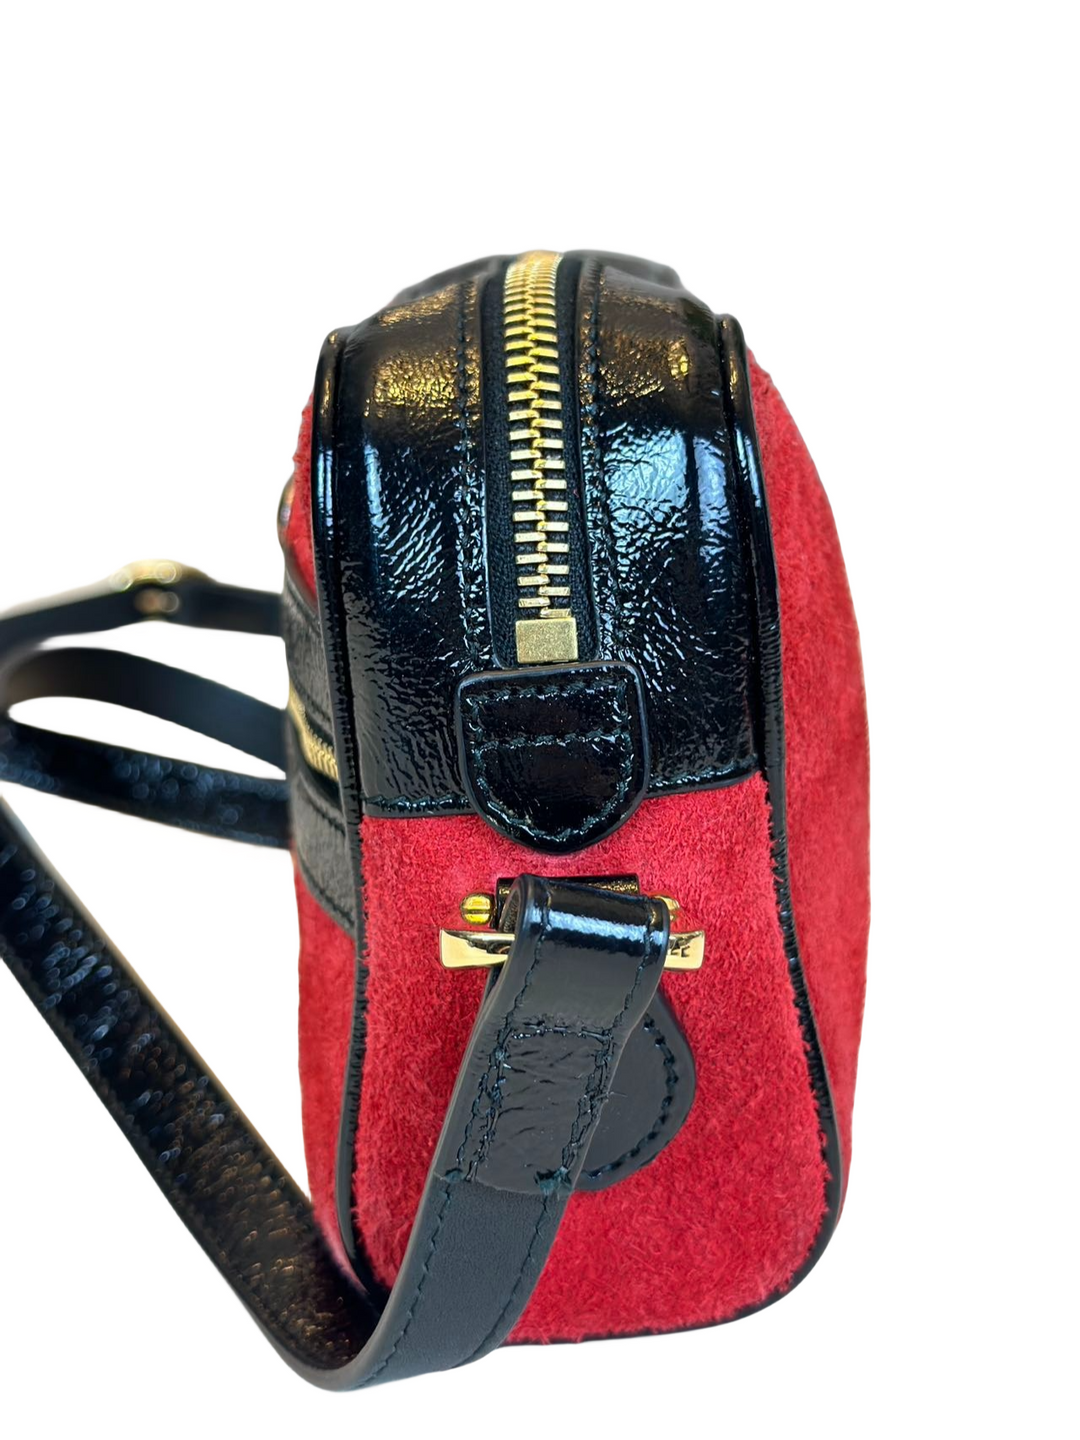 Pre-Owned Gucci Red Velvet Ophidia Shoulder Bag Crossbody